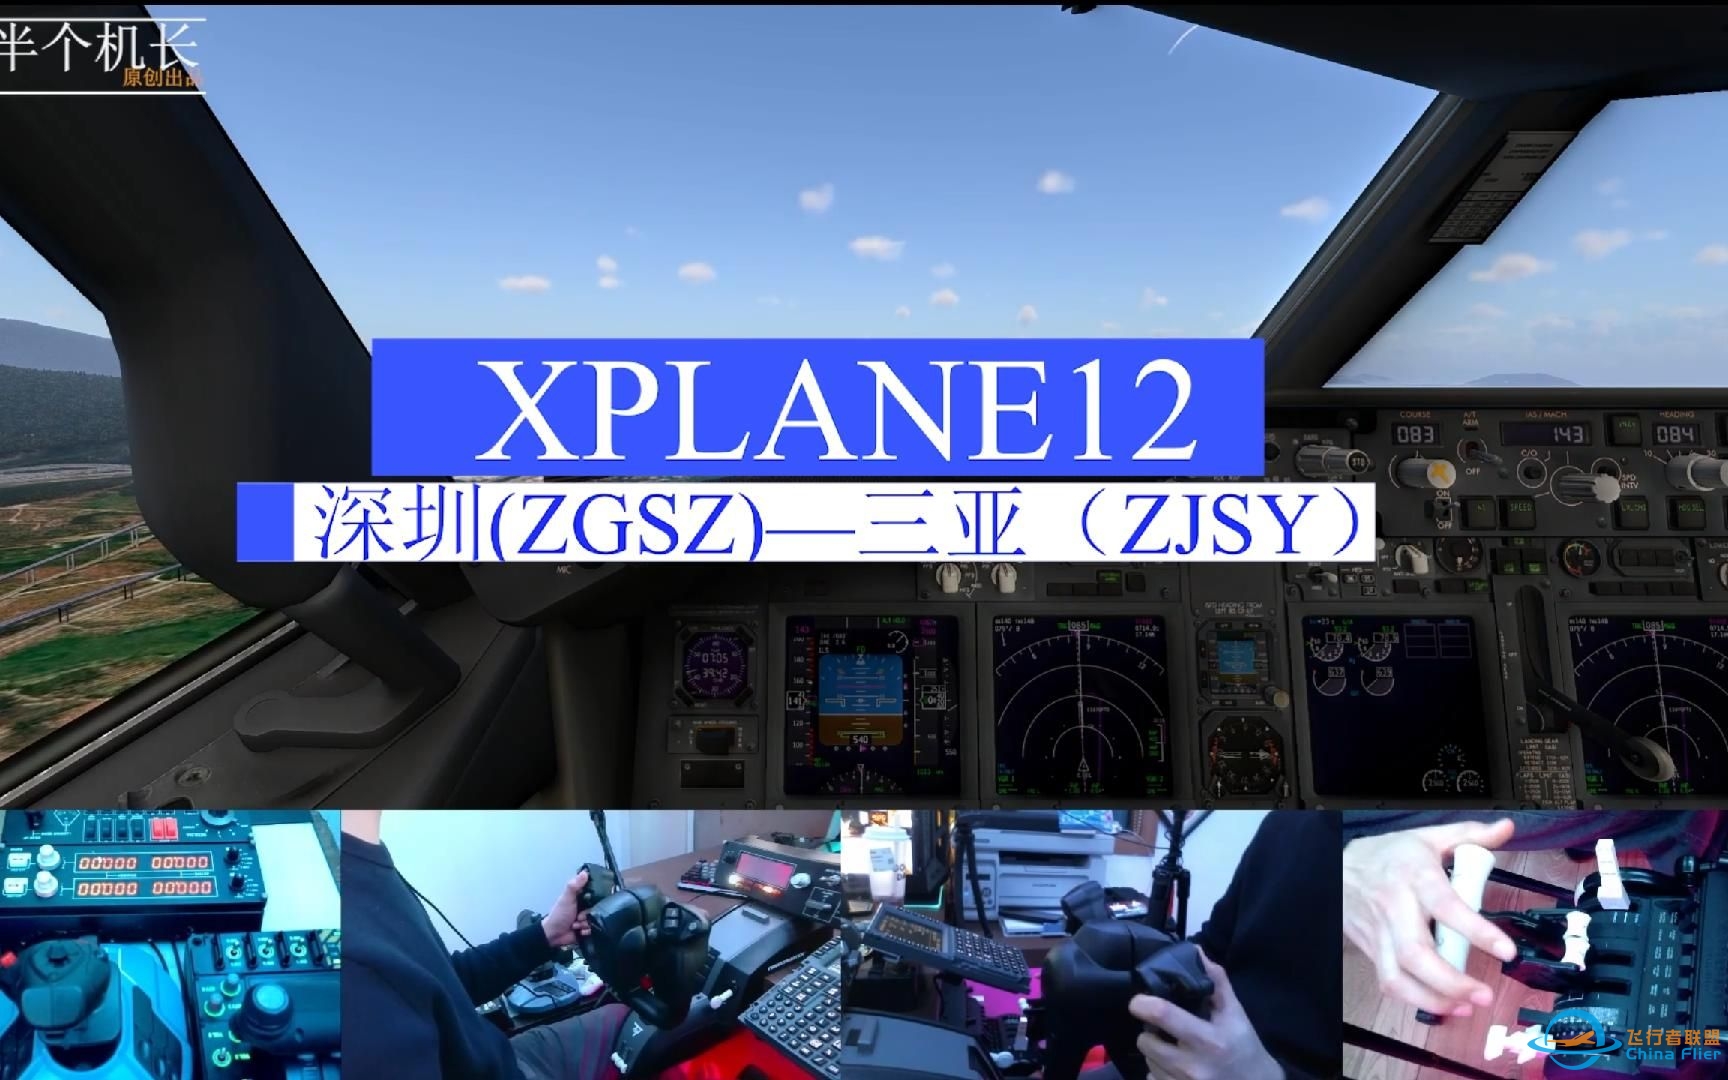 XPLANE12：客机重量过重，险些没能成功离开跑道，艰难拉起起飞-2801 